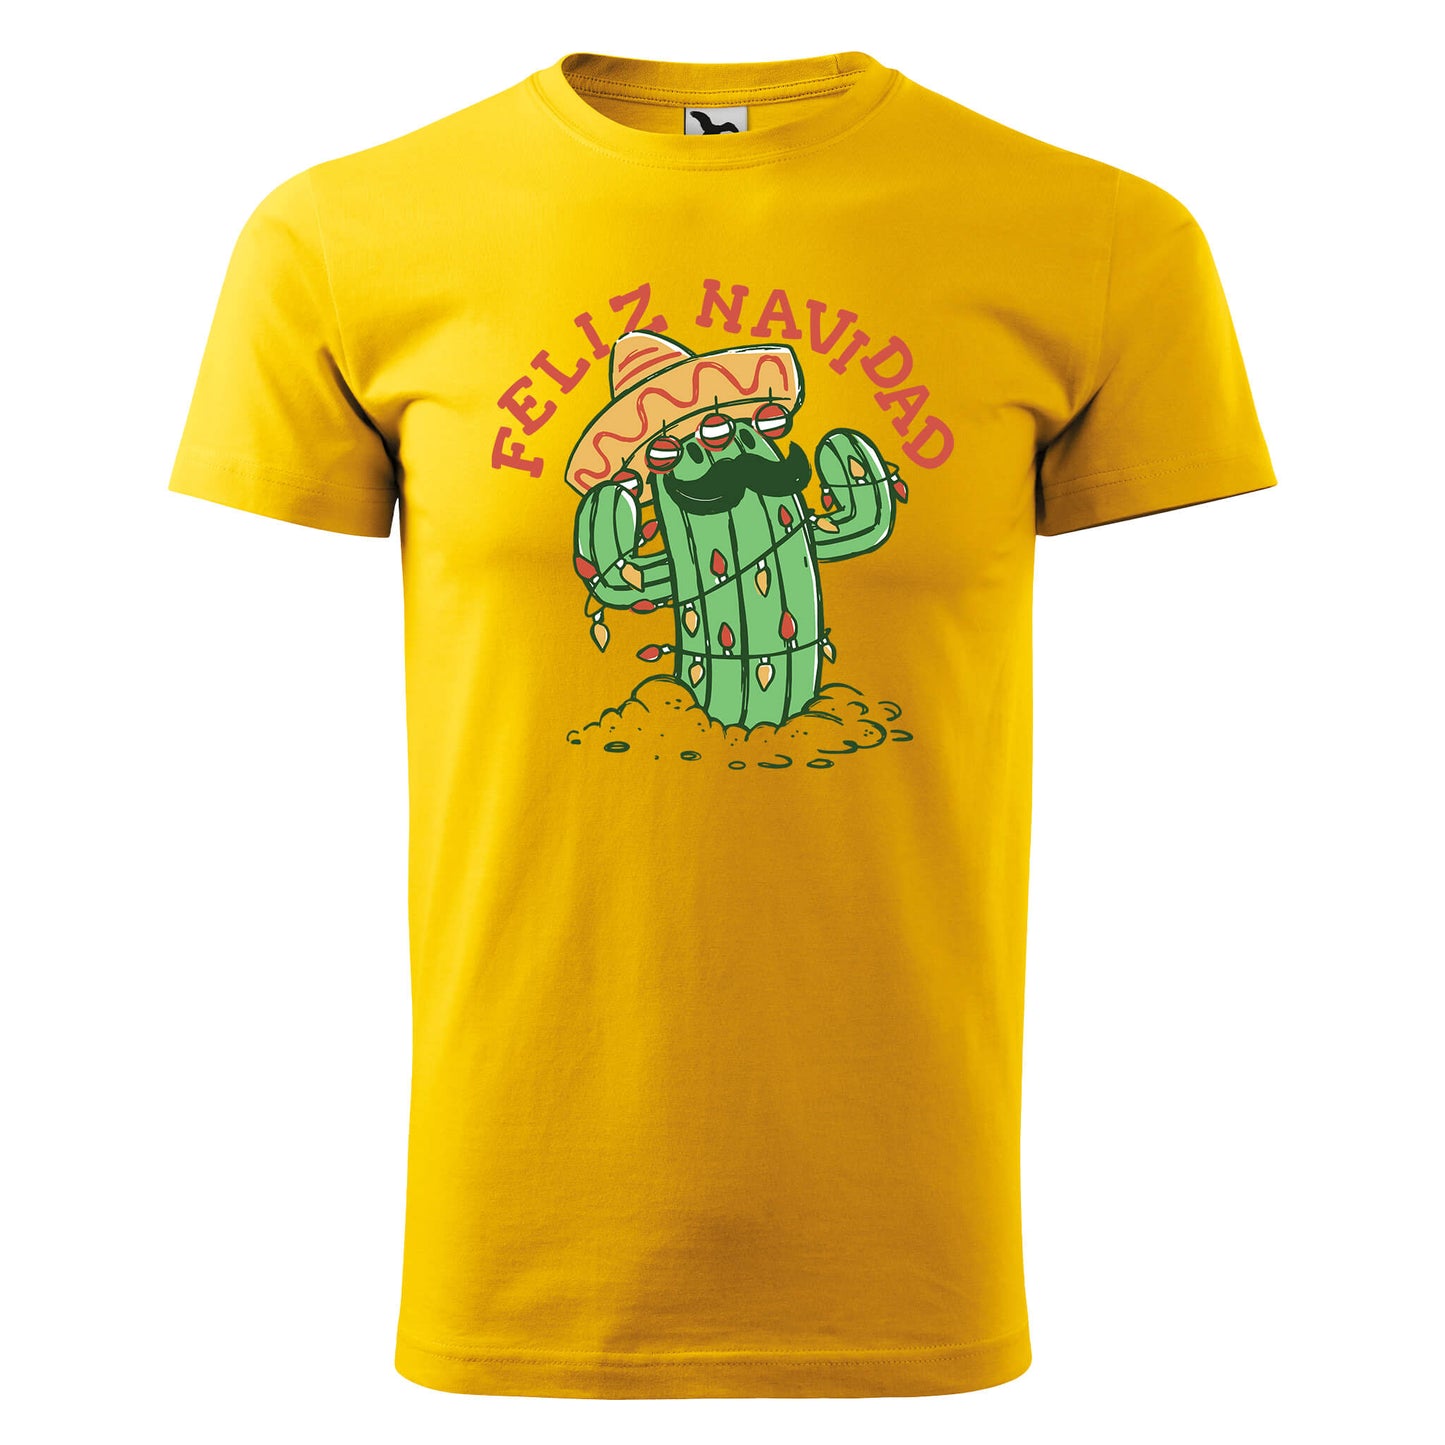 Feliz navidad cactus t-shirt - rvdesignprint